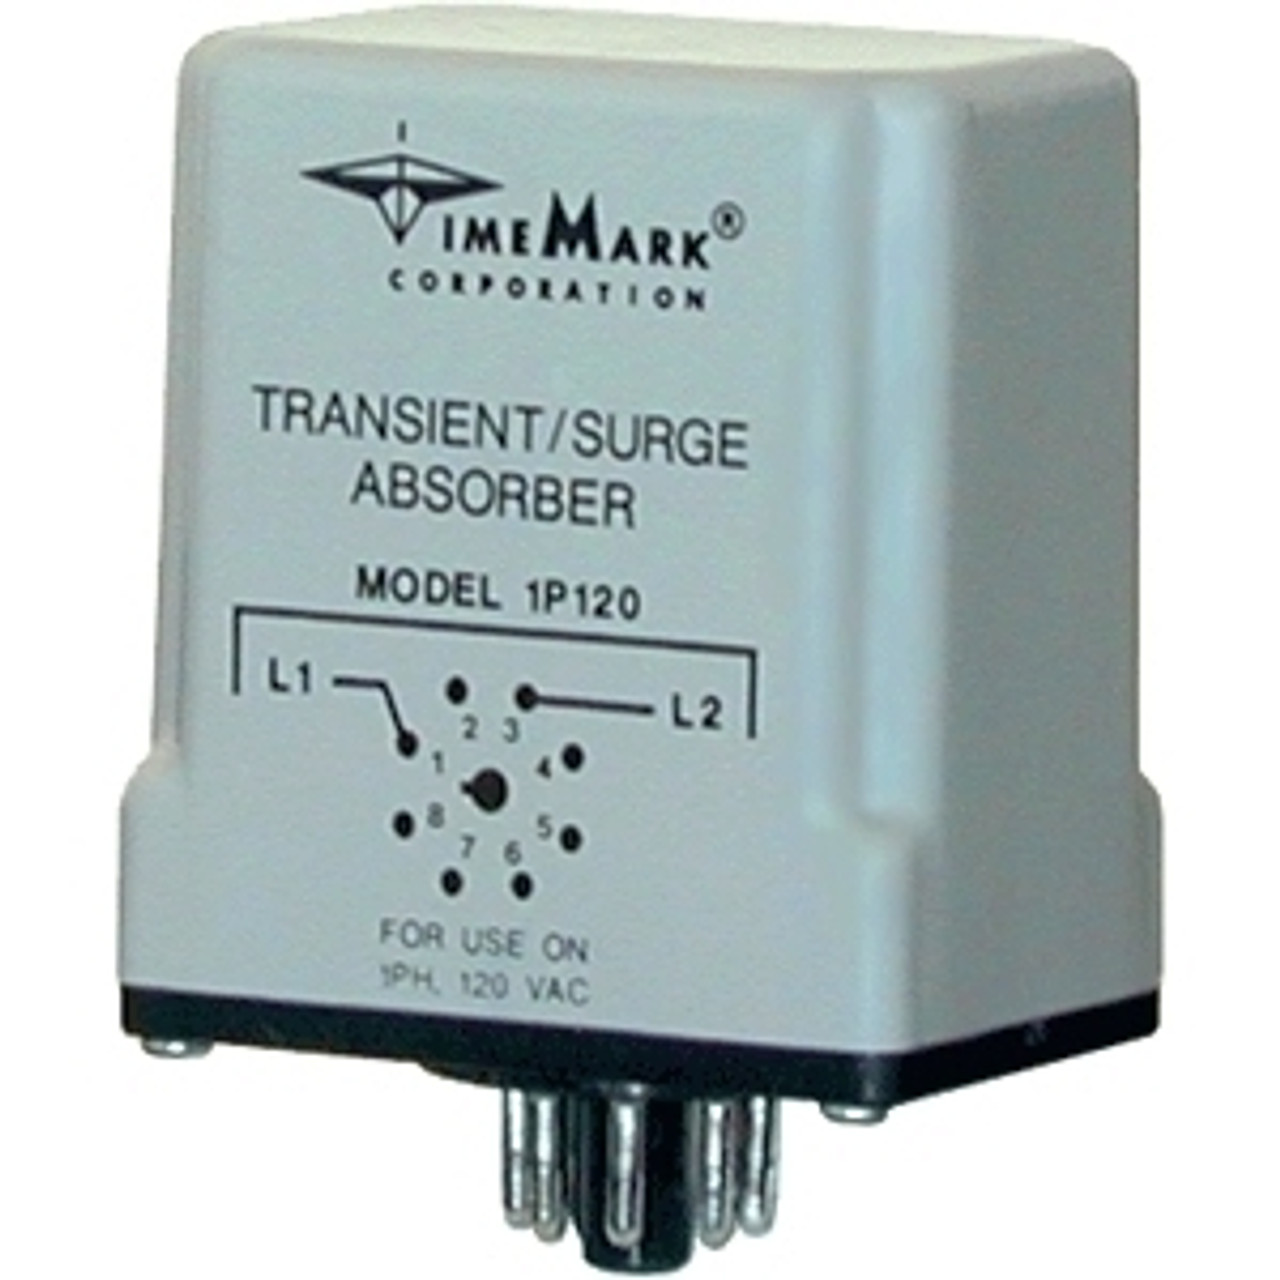 TimeMark 3PD-120 3-Phase